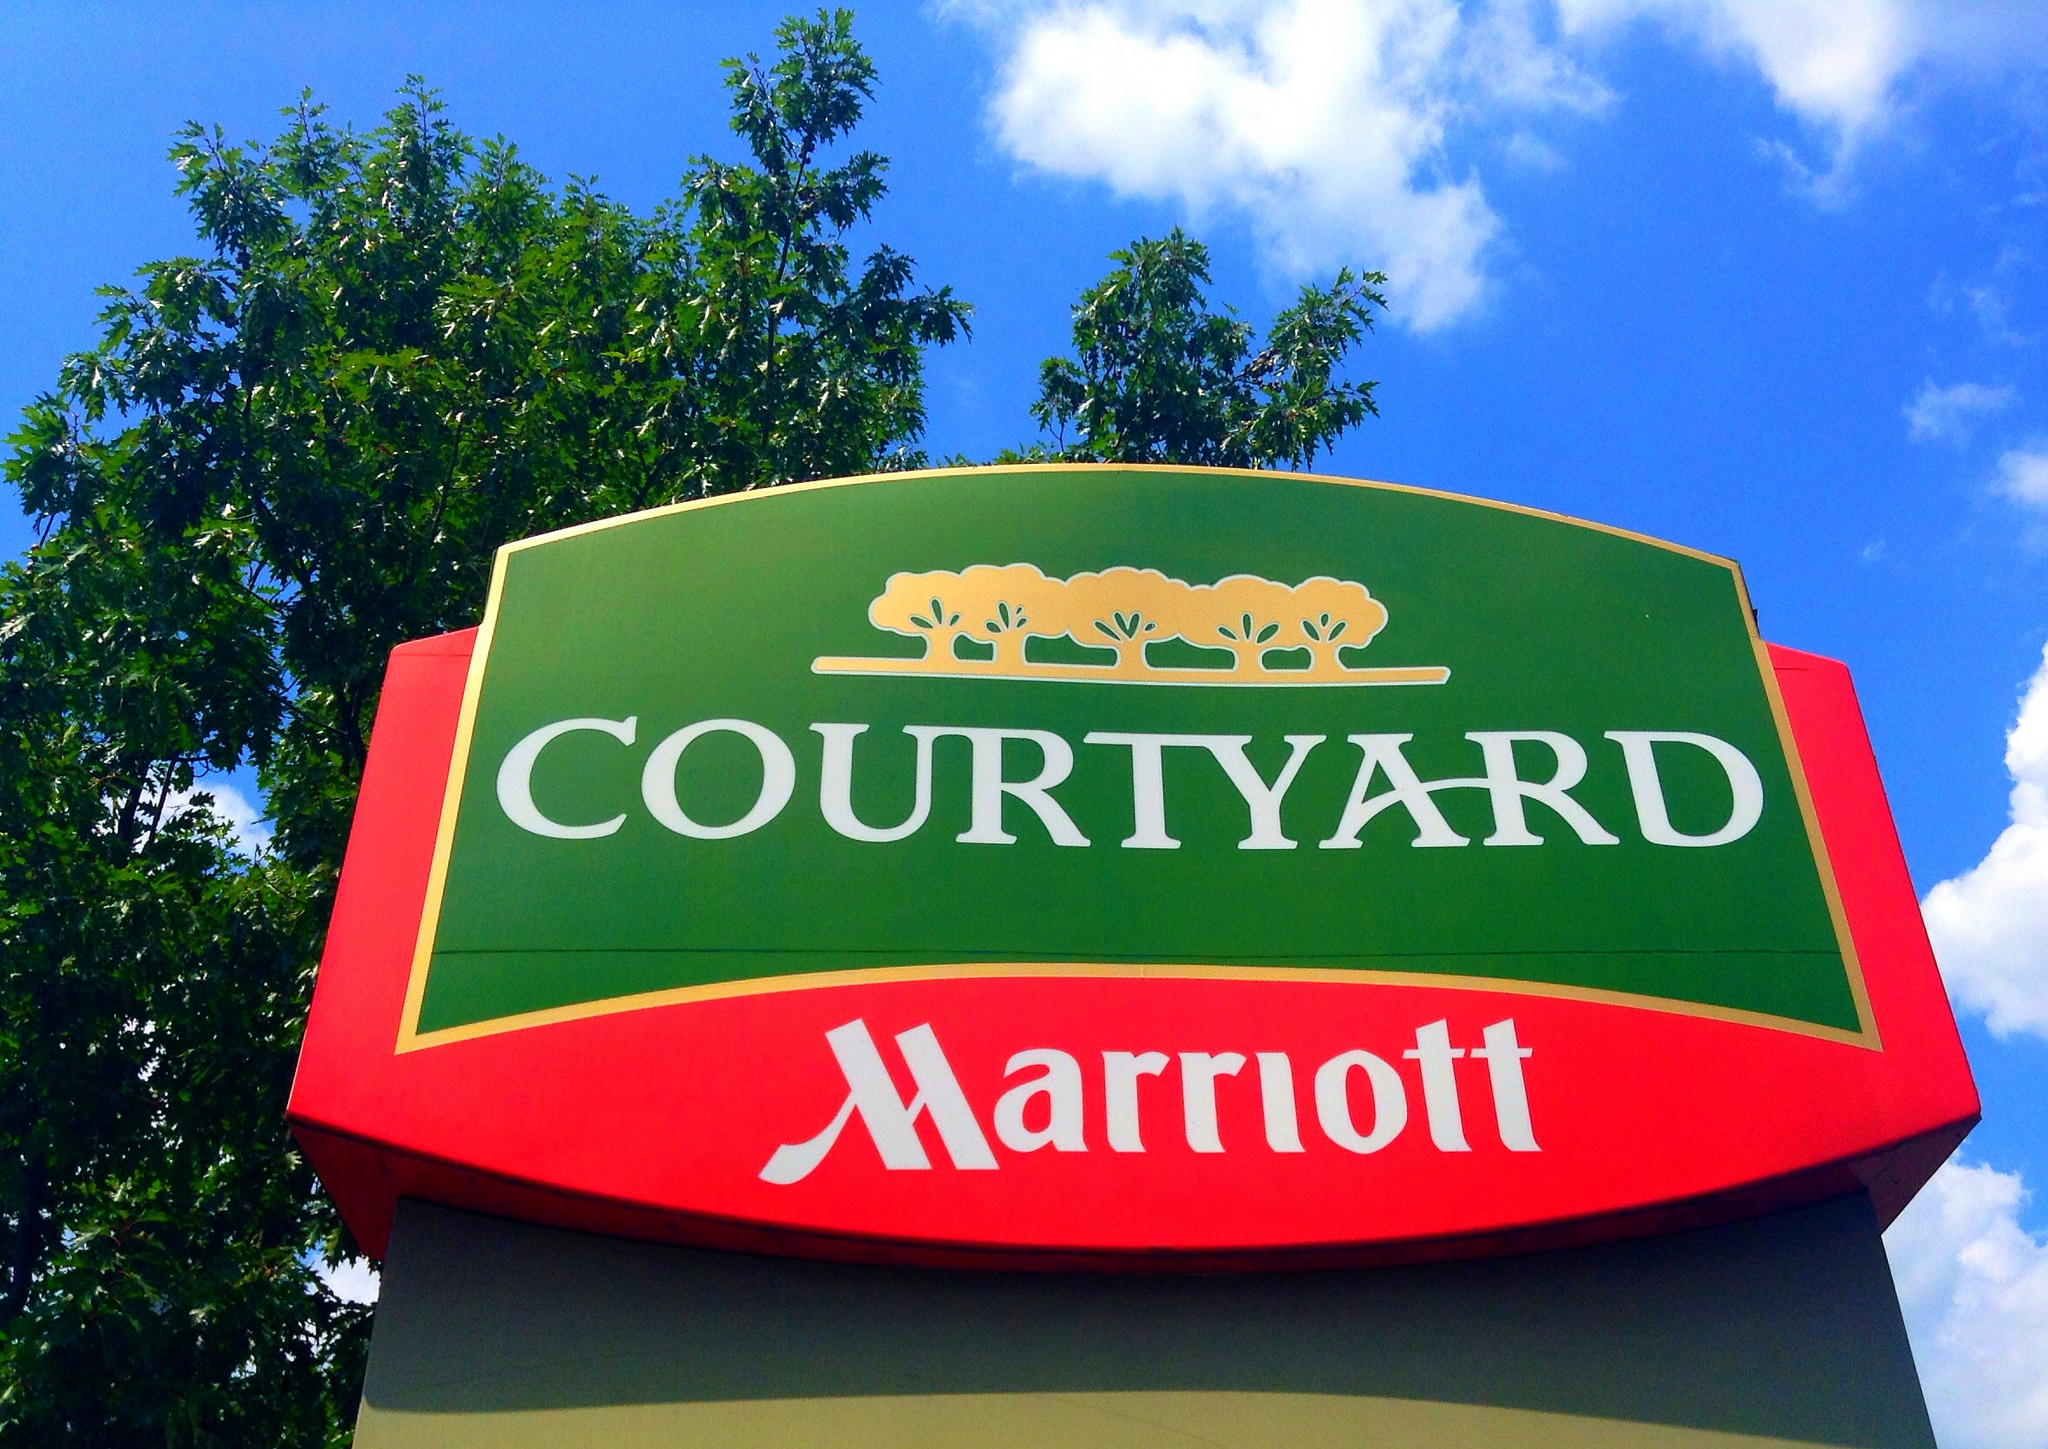 Courtyard Marriott hotel